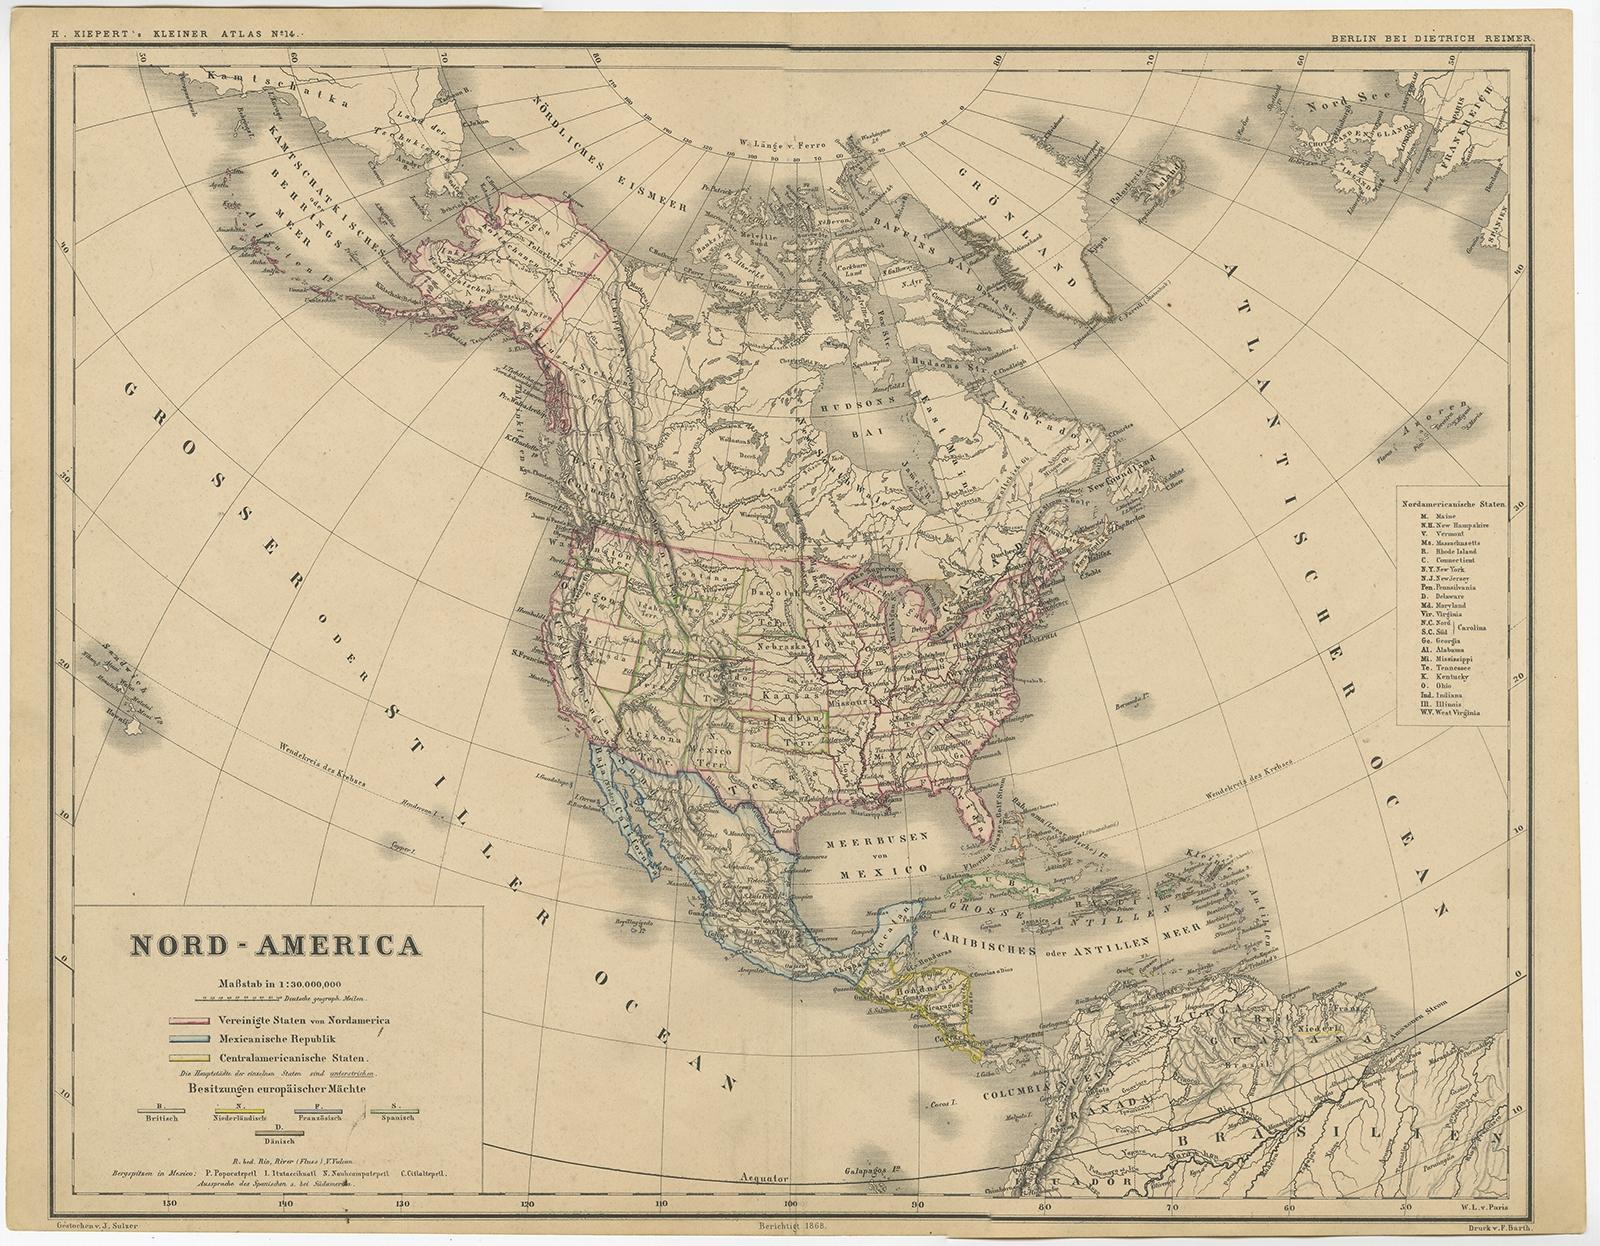 Antique map titled 'Nord-America'. 

Old map of North America. This map originates from 'H. Kiepert's Kleiner Atlas der Neueren Geographie für Schule und Haus'. 

Artists and Engravers: Kiepert, Heinrich (1818-1899), was a German geographer, and the